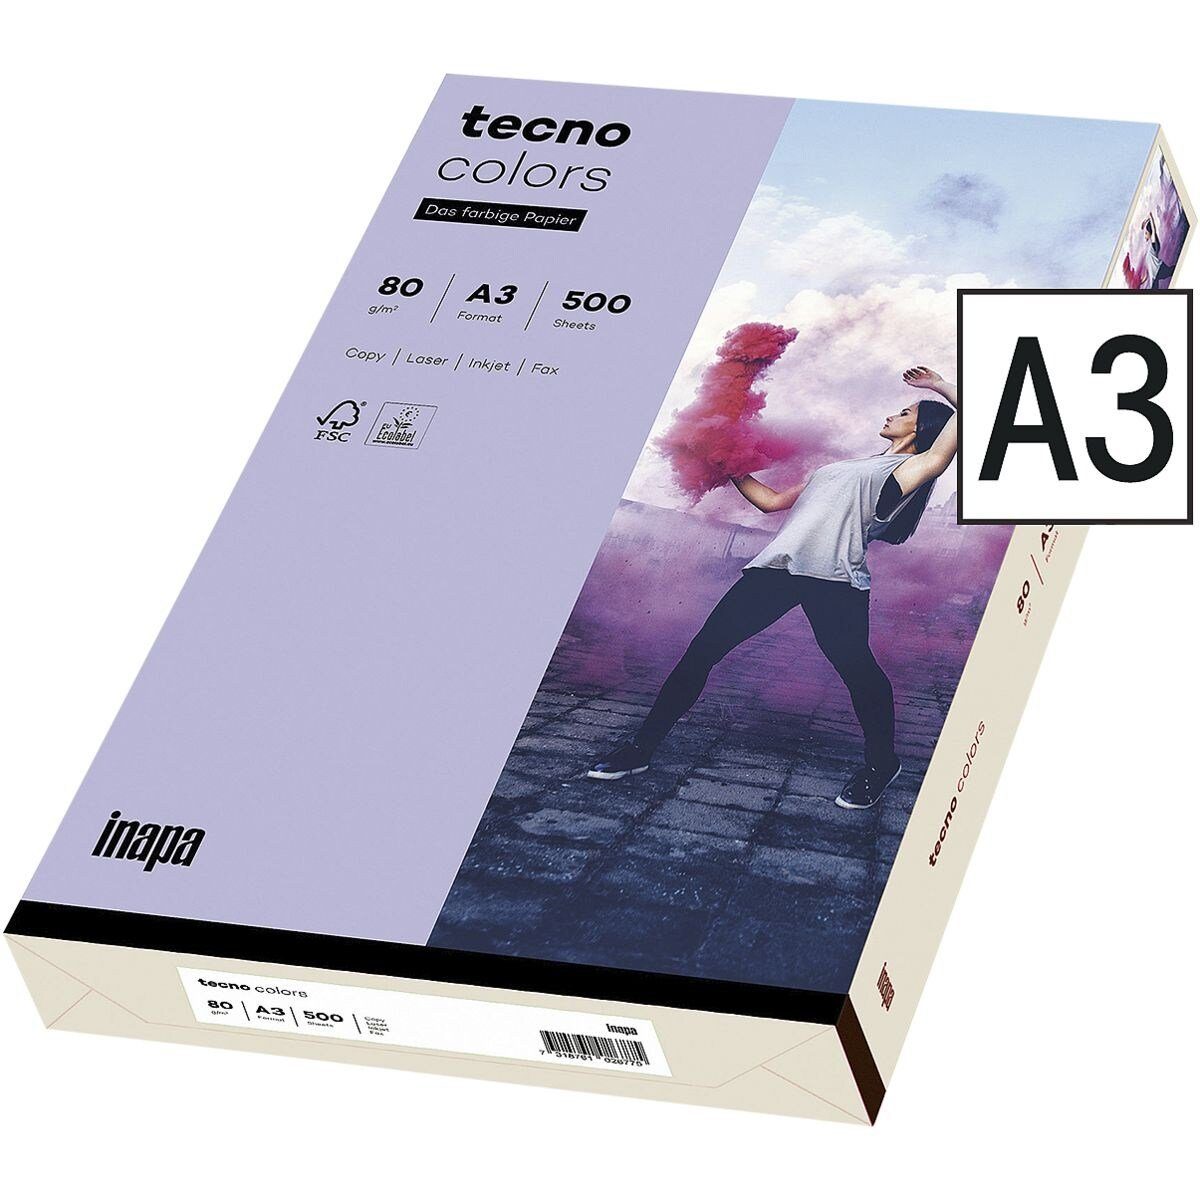 Inapa tecno Drucker- und Blatt violett g/m², A3, Rainbow / Kopierpapier DIN Format 80 500 tecno Colors, Pastellfarben